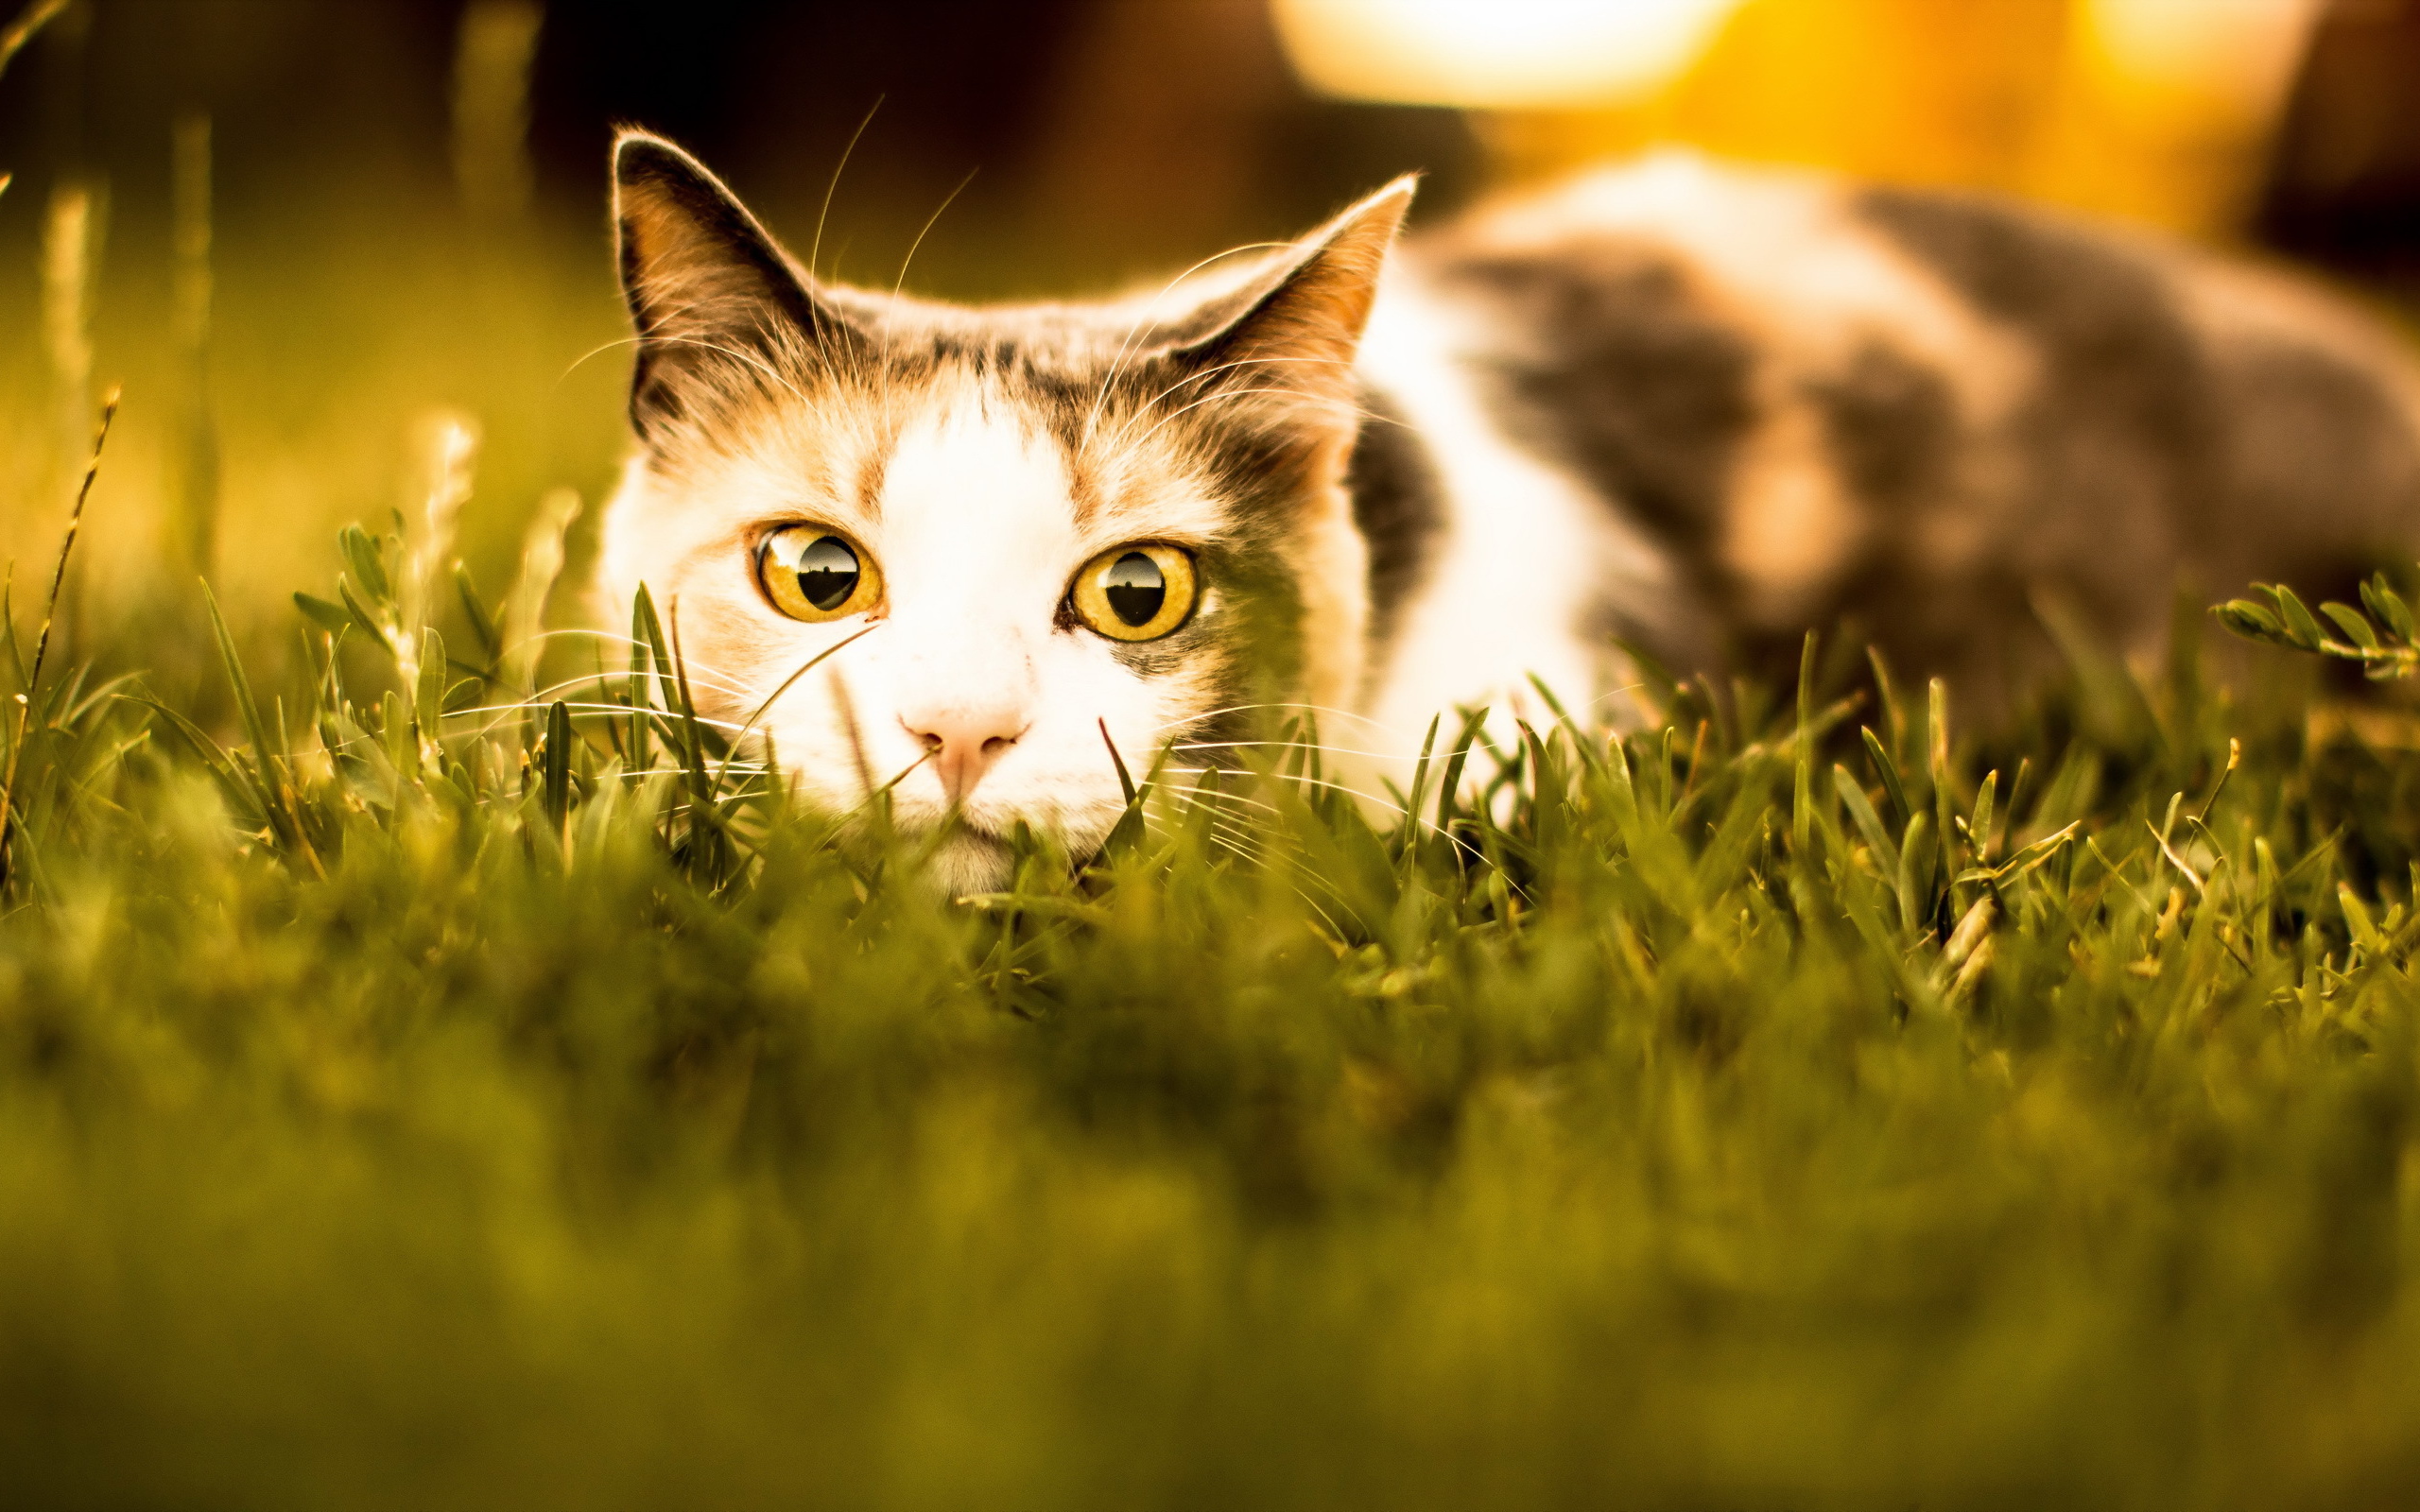 Трехцветная кошка в засаде в траве 